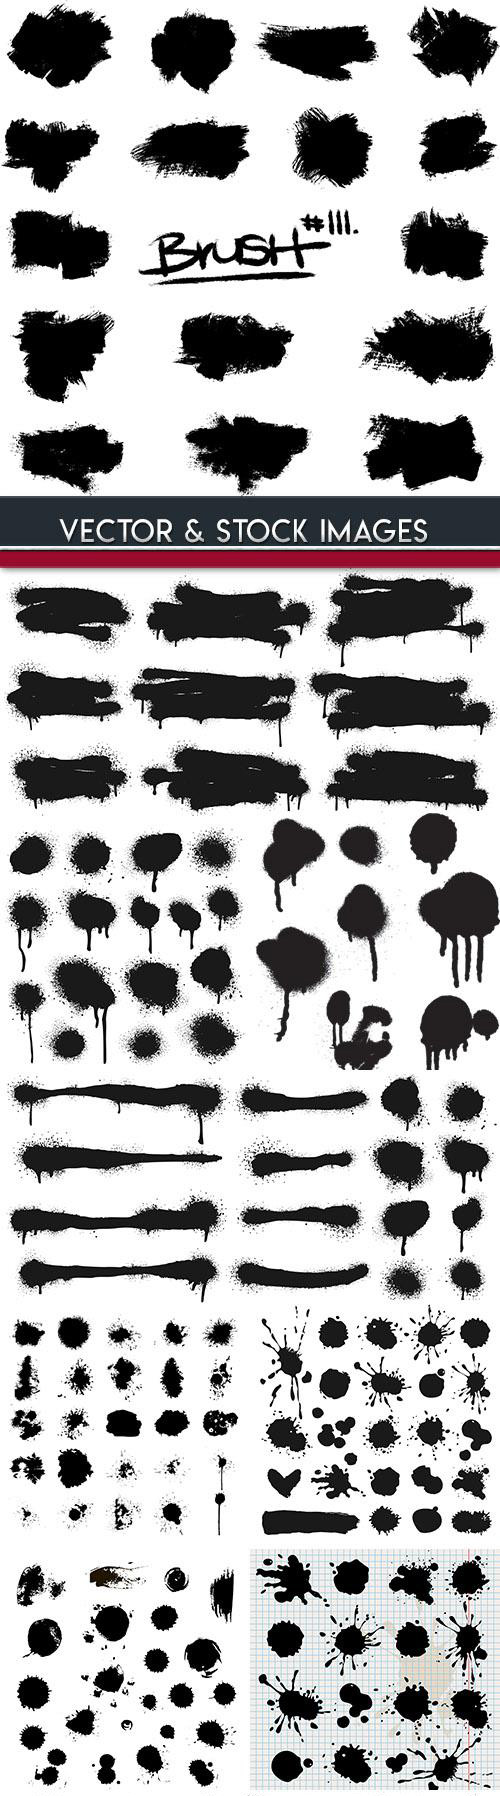 Grunge black ink and brush creative illustration 5